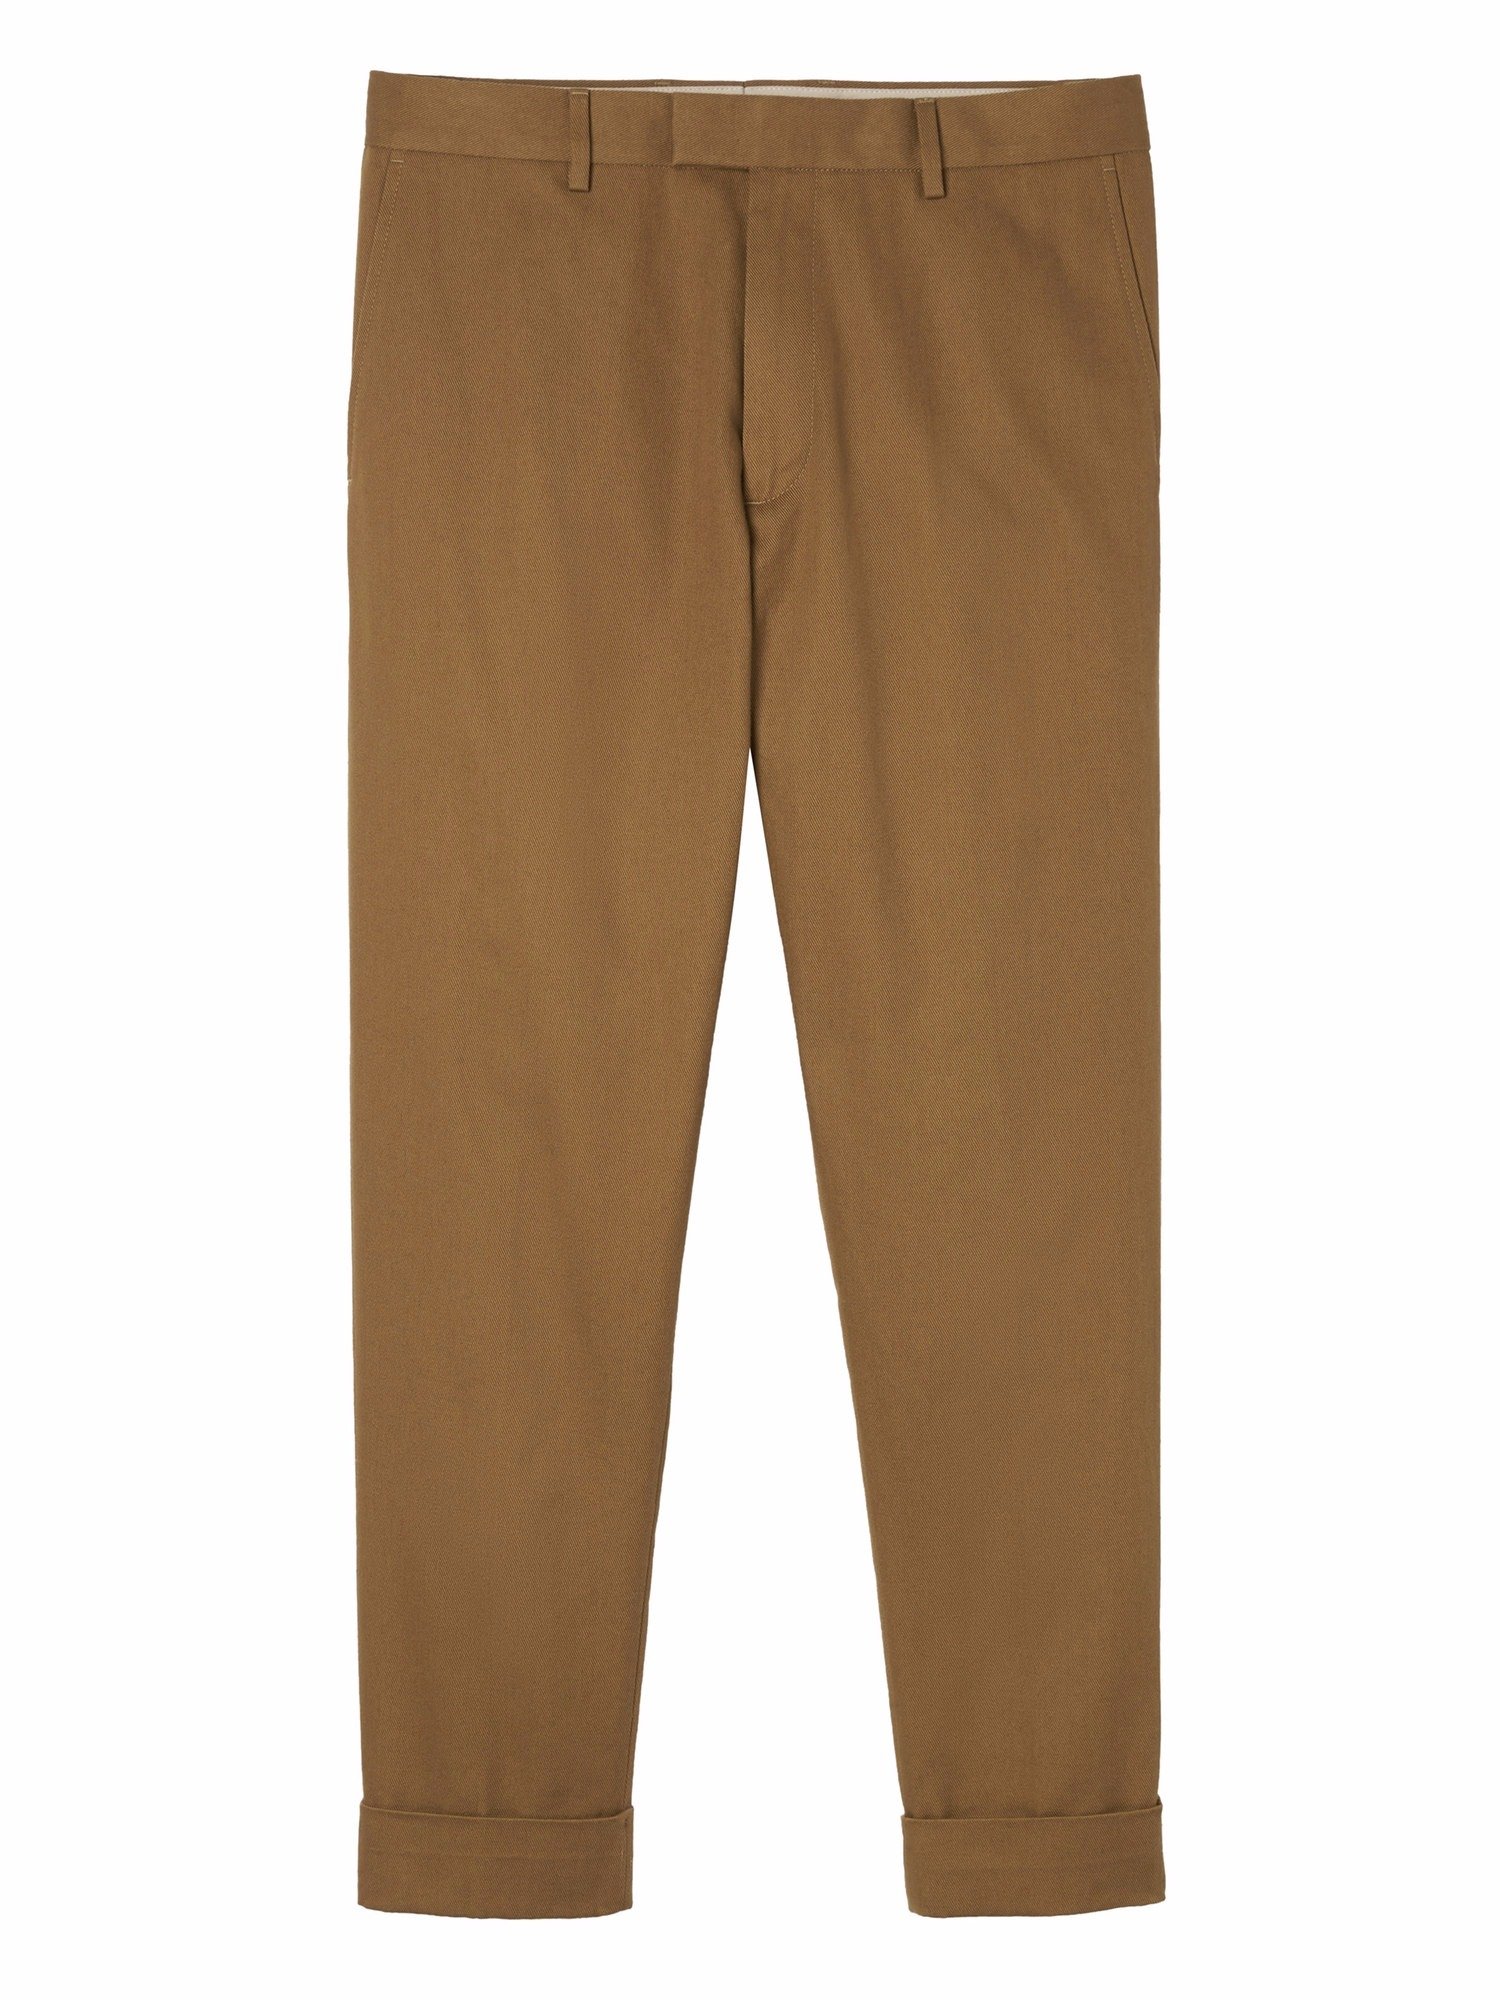 Katlanmış Paçalı Pantolon product image